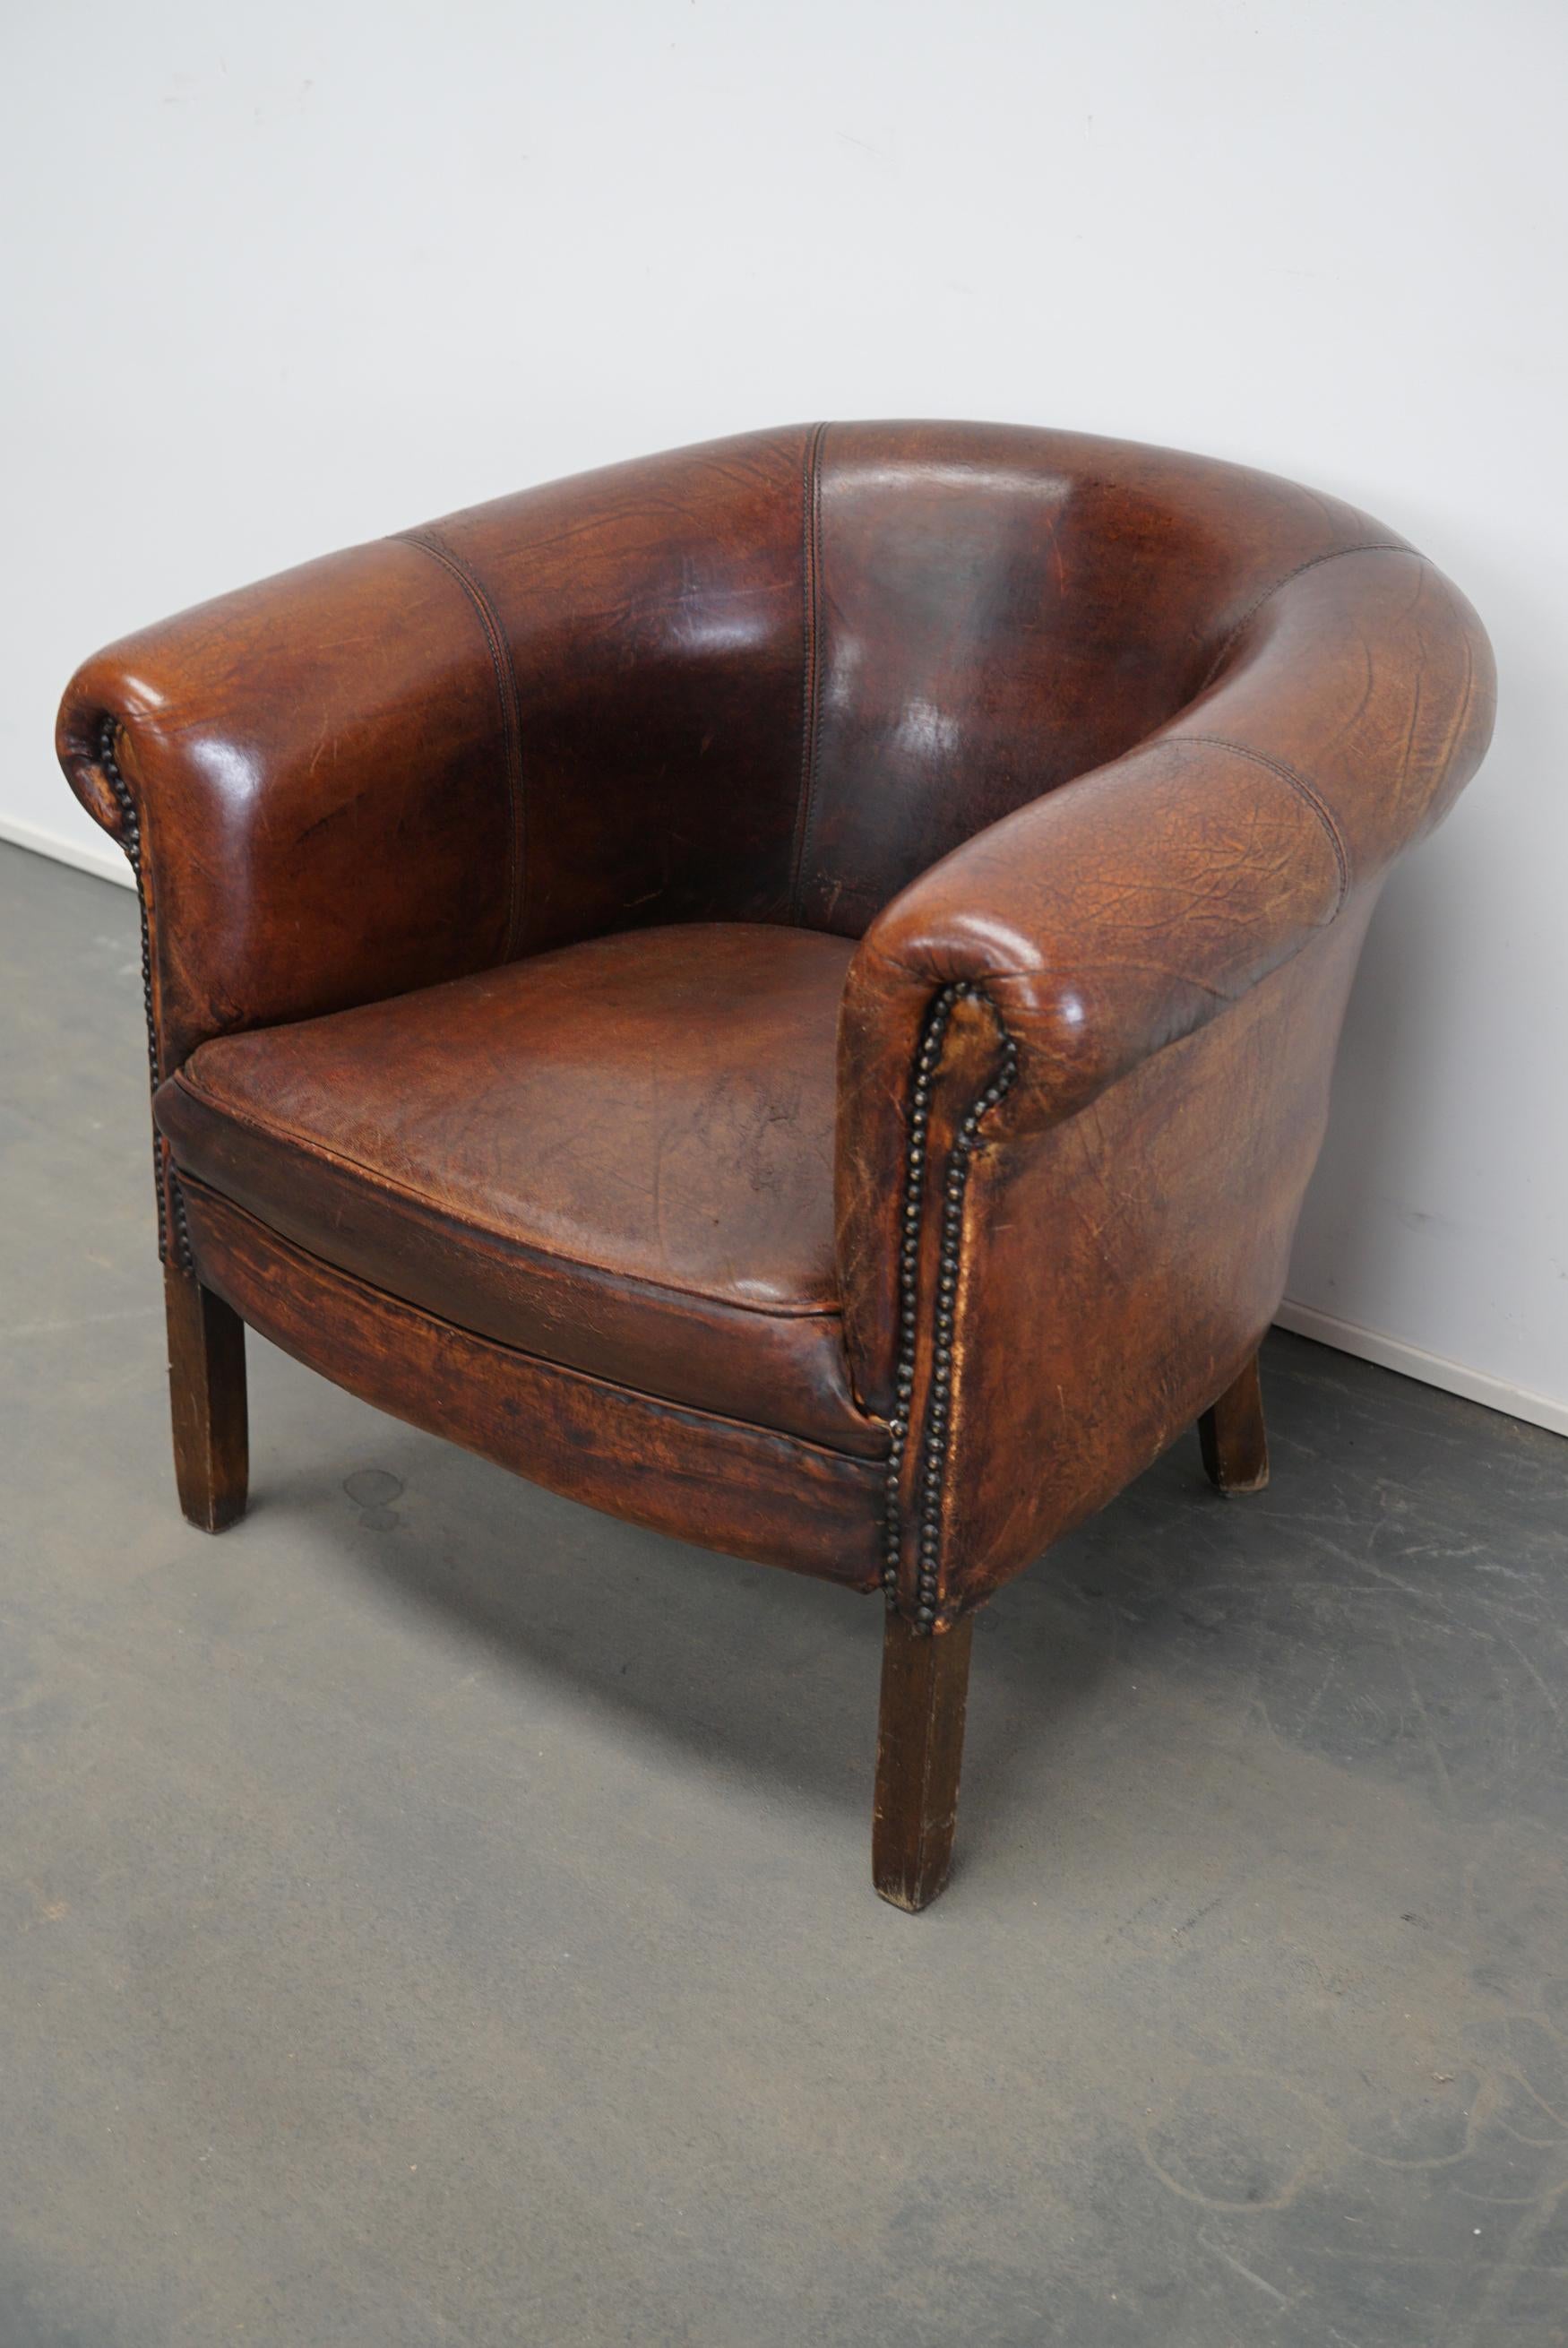 Industrial Vintage Dutch Burgundy-Colored Leather Club Chair